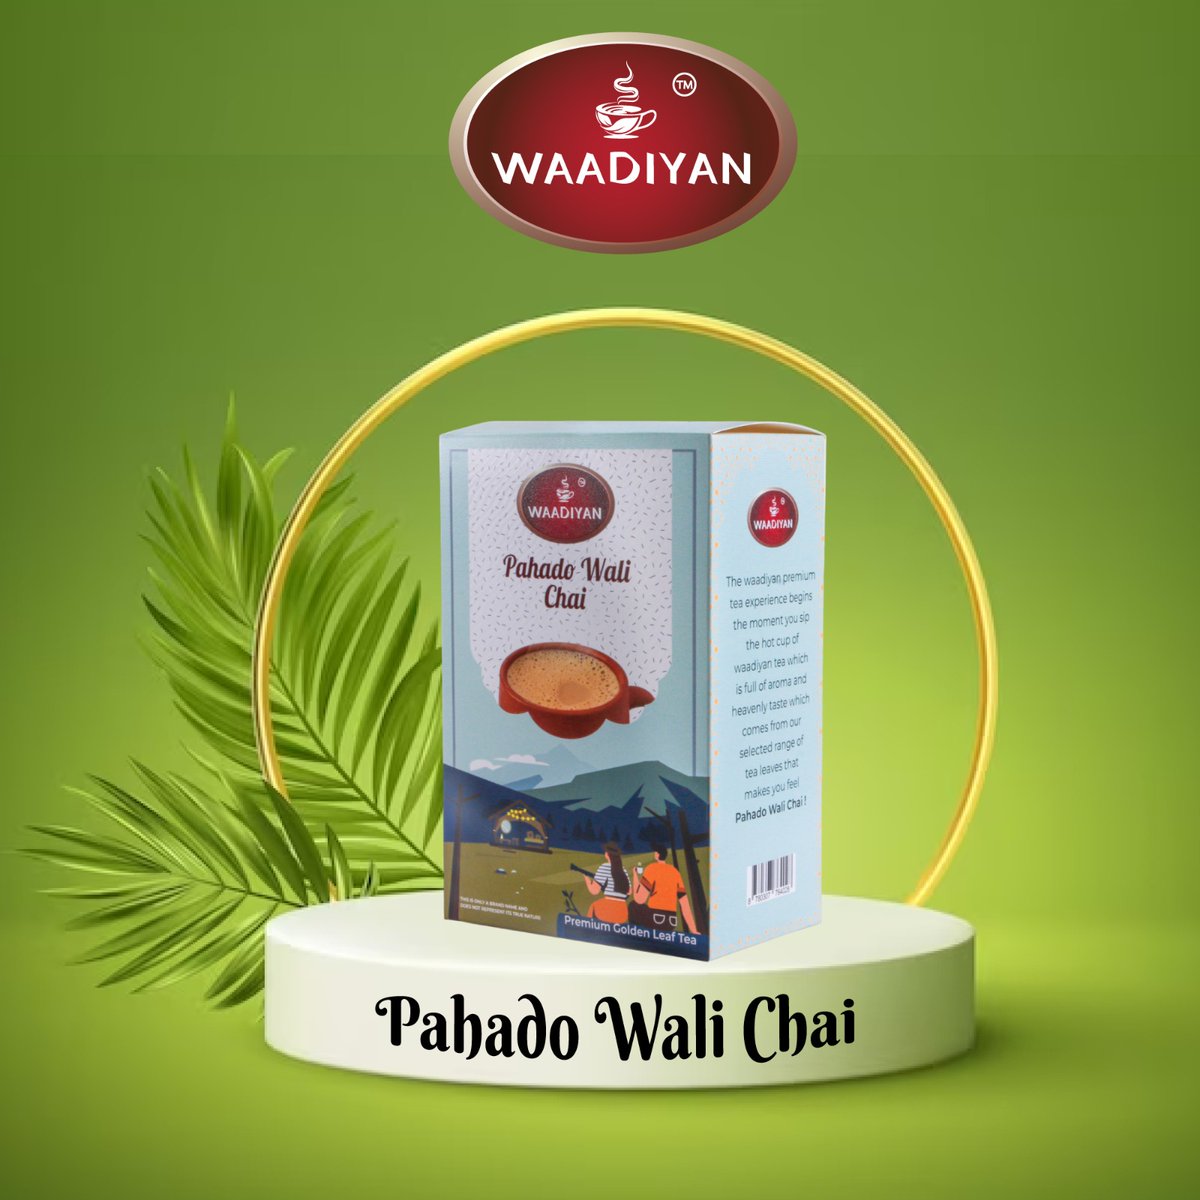 Indulge in the premium golden leaf tea experience with our Pahado Wali Chai by Waadiyan Tea. 
It's a true natural bliss.

#WaadiyanTea #ChaiSeason #WinterWarmth #SipAndSavor  #chai #chailover  #chailife #chaieverytime  #chaieveryday #tea #pahadowalichai #chailovers